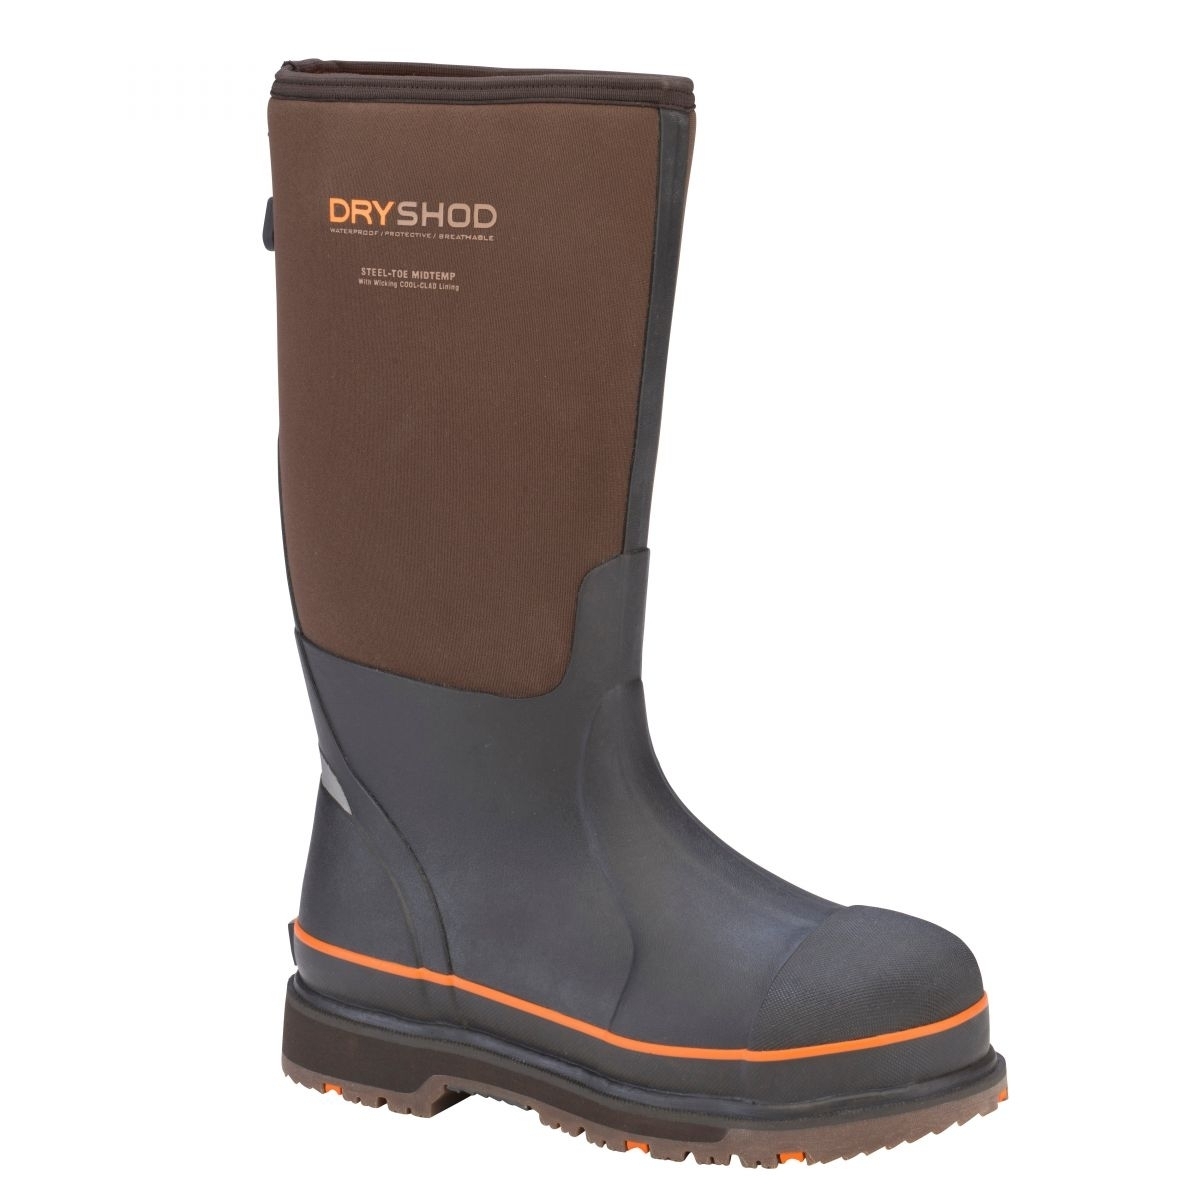 DRYSHOD WORK Men's Steel Toe WIXIT Cool-Cladâ¢ Waterproof Work Boot Brown/Orange - STT-UH-BR ONE SIZE BROWN/ORANGE - BROWN/ORANGE, 14